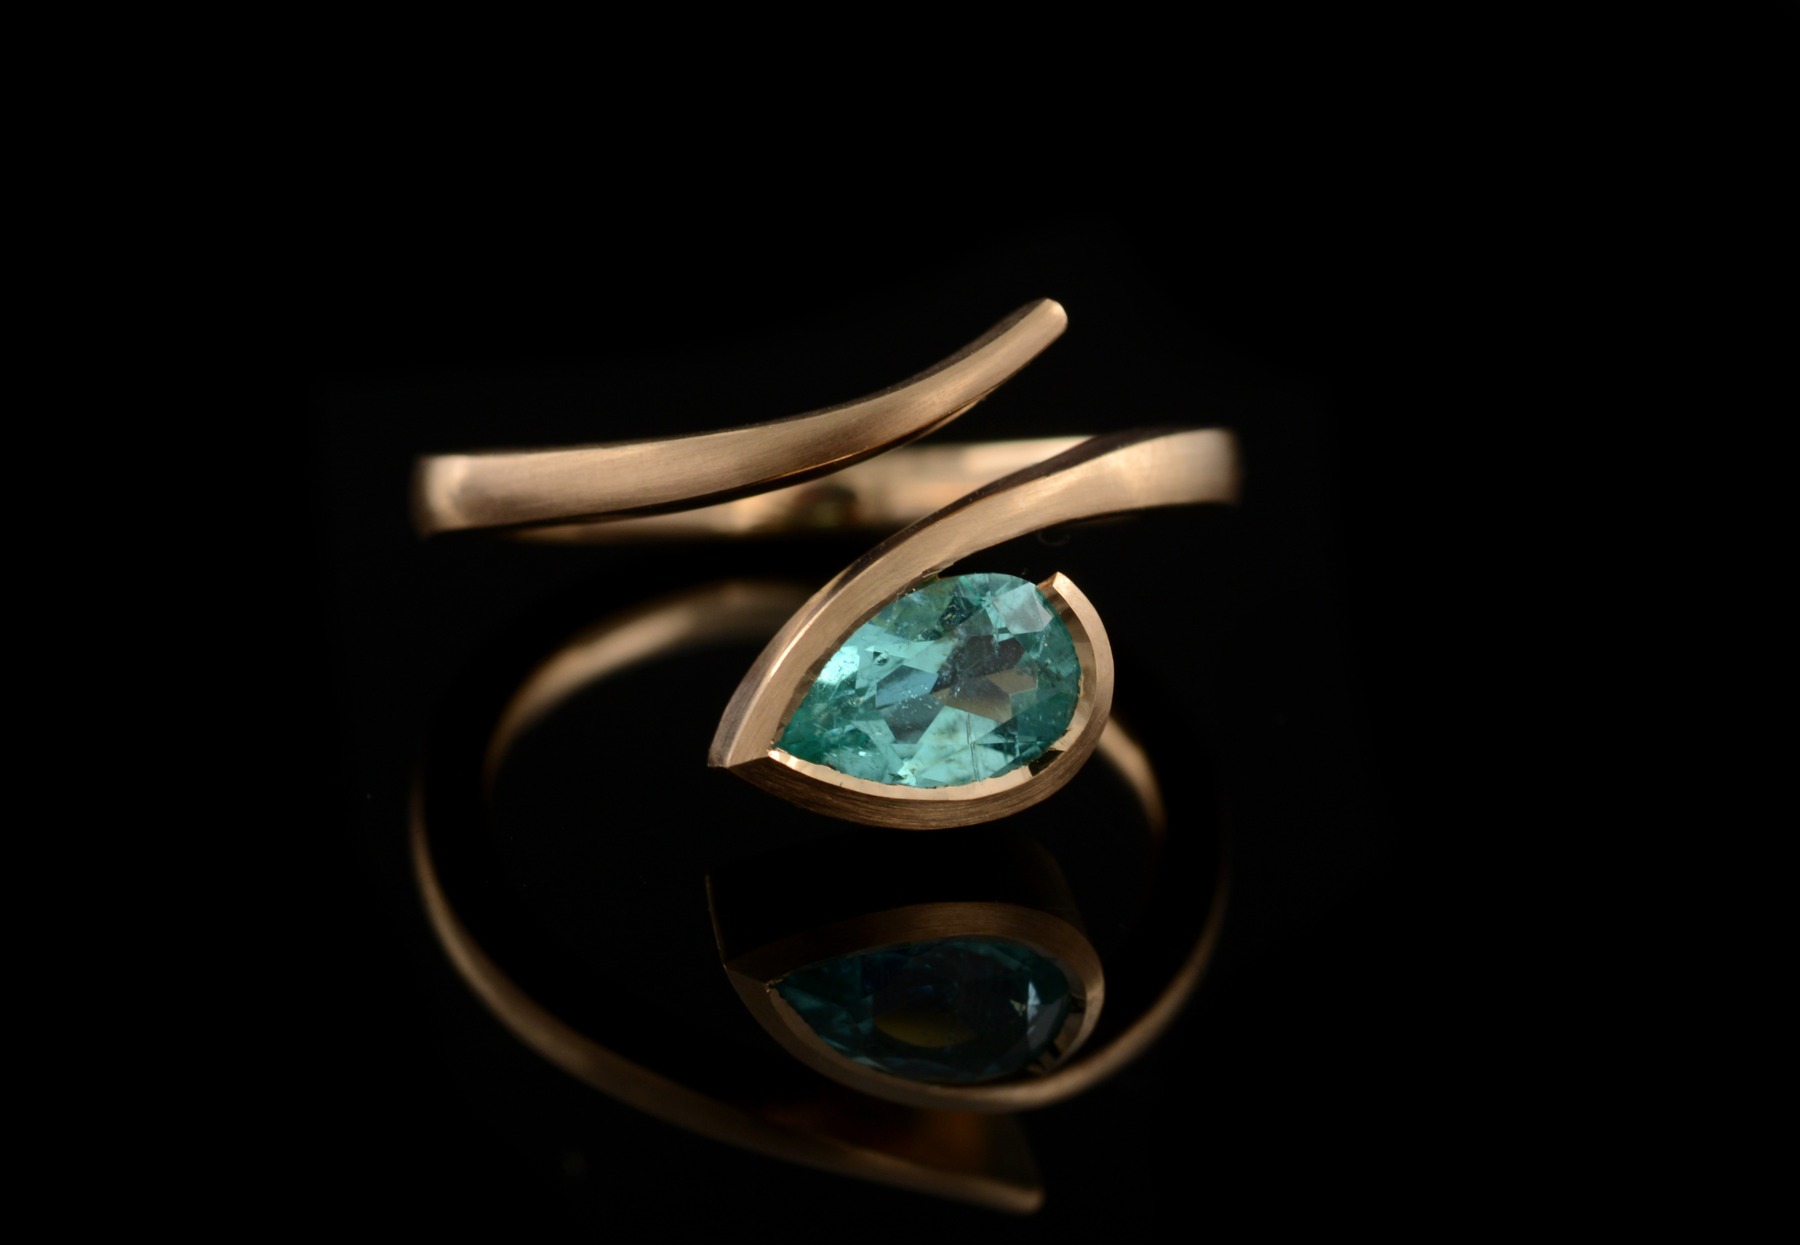 'Twist' rose gold engagement ring with paraiba tourmaline